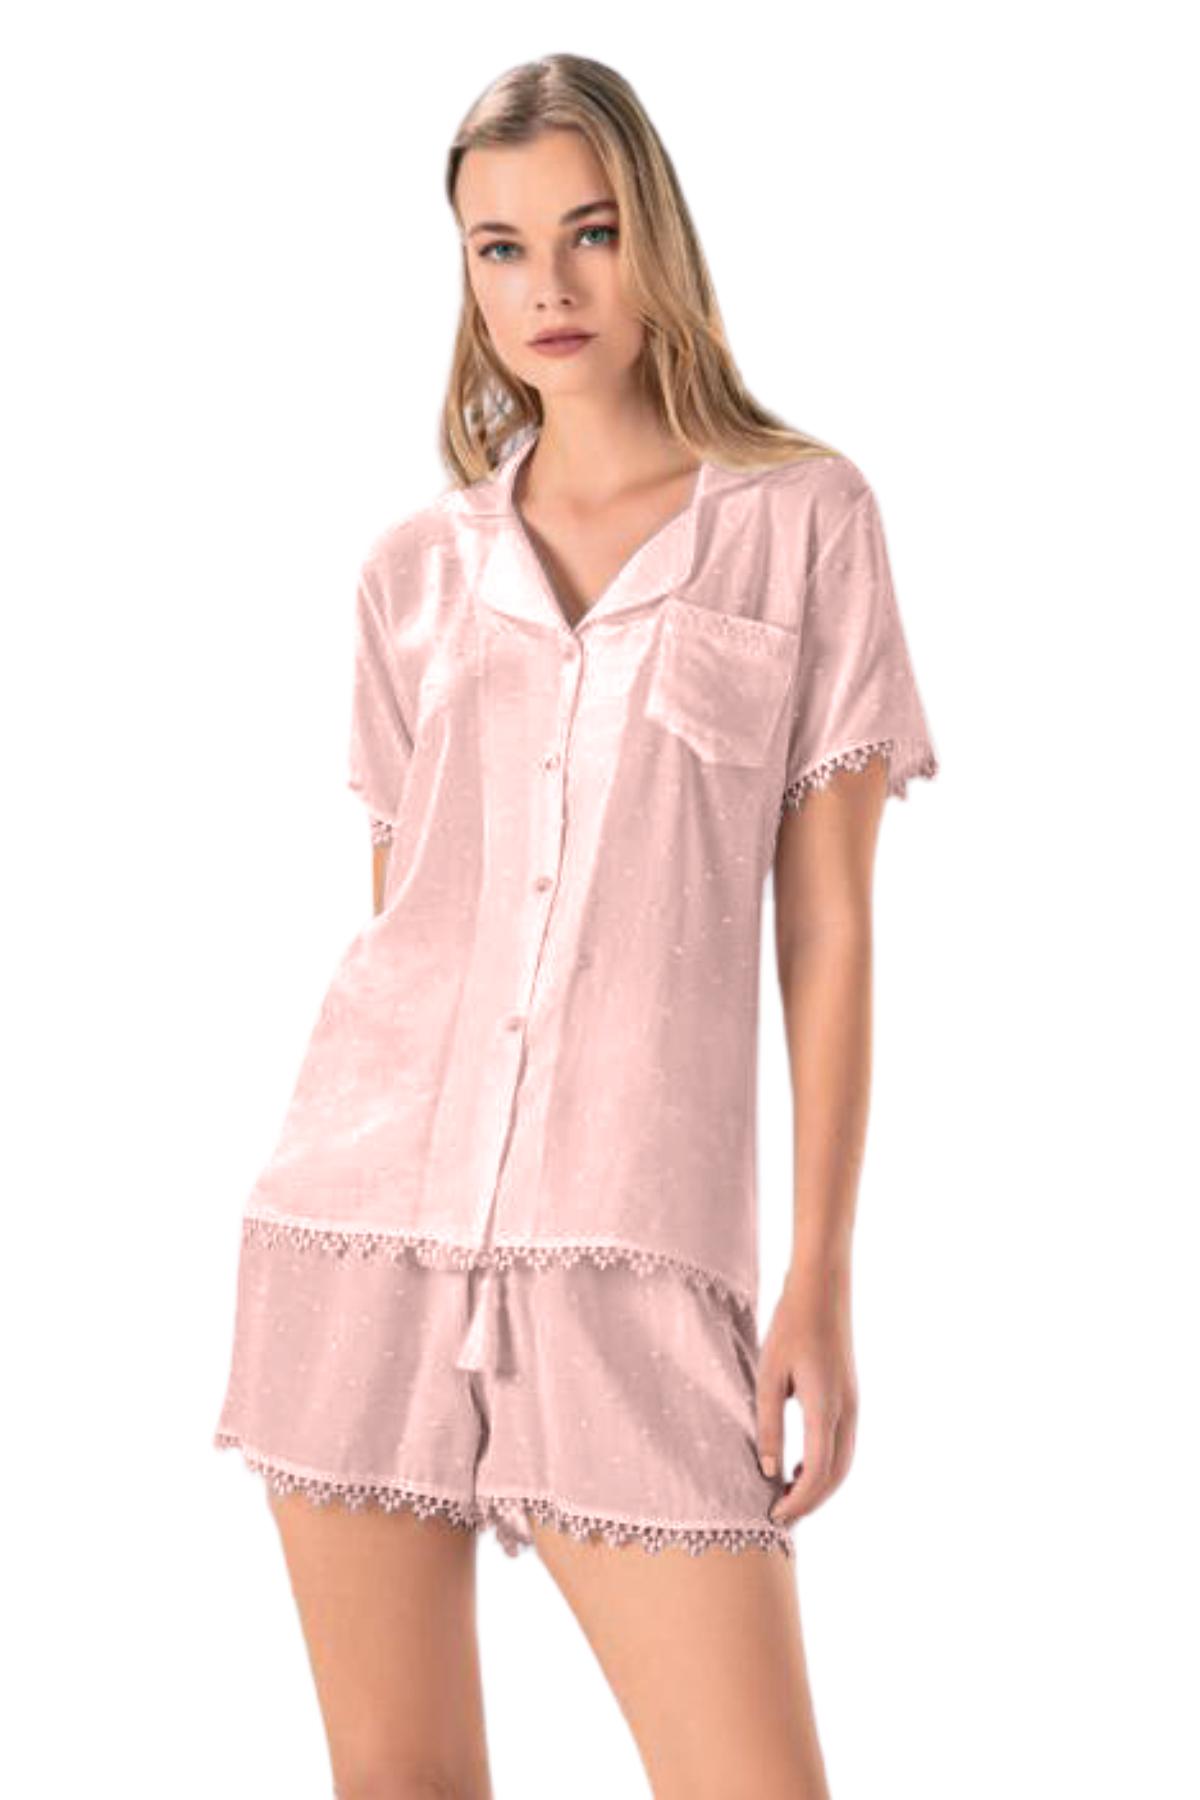 Selected image for FLZ Ženska pidžama 8610 roze